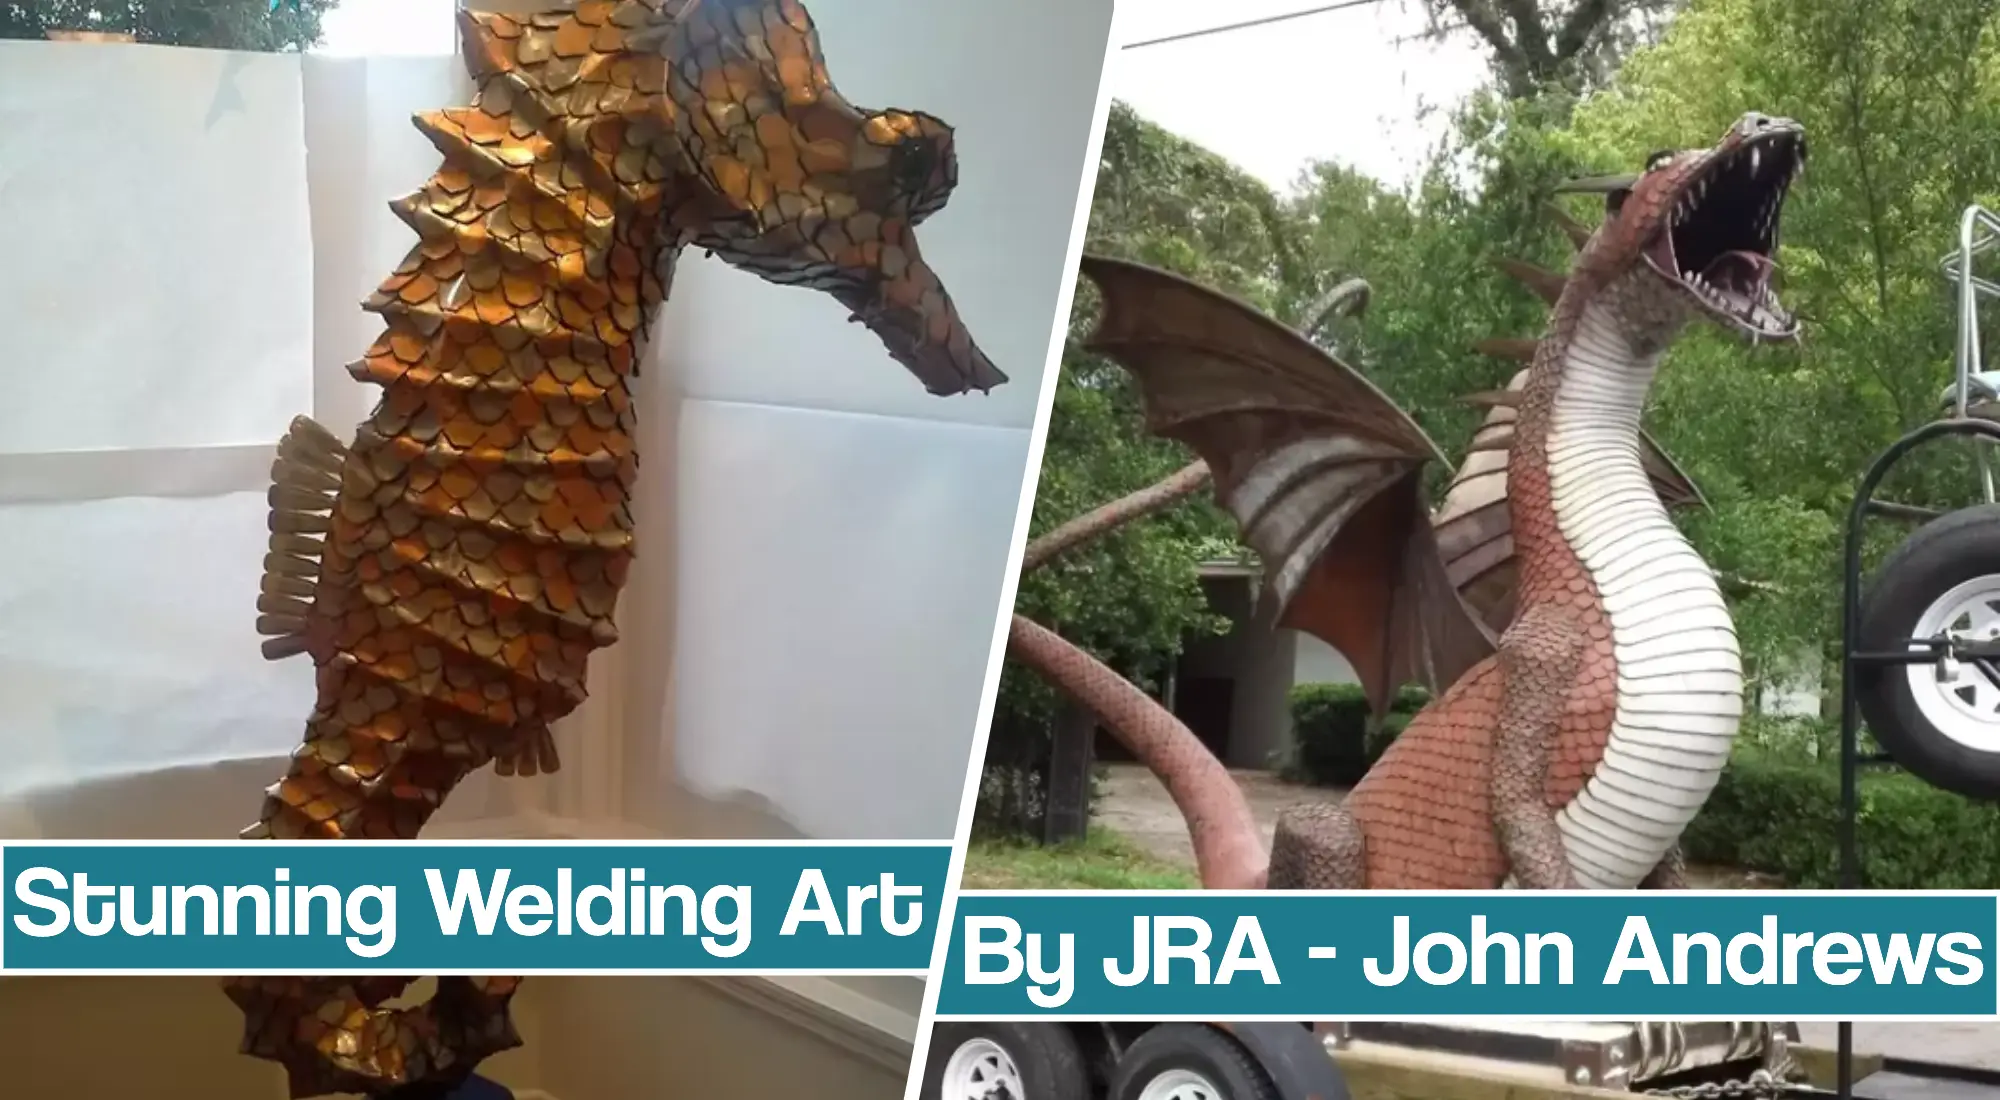 JRA Welding – Stunning Welding Art by John Andrews